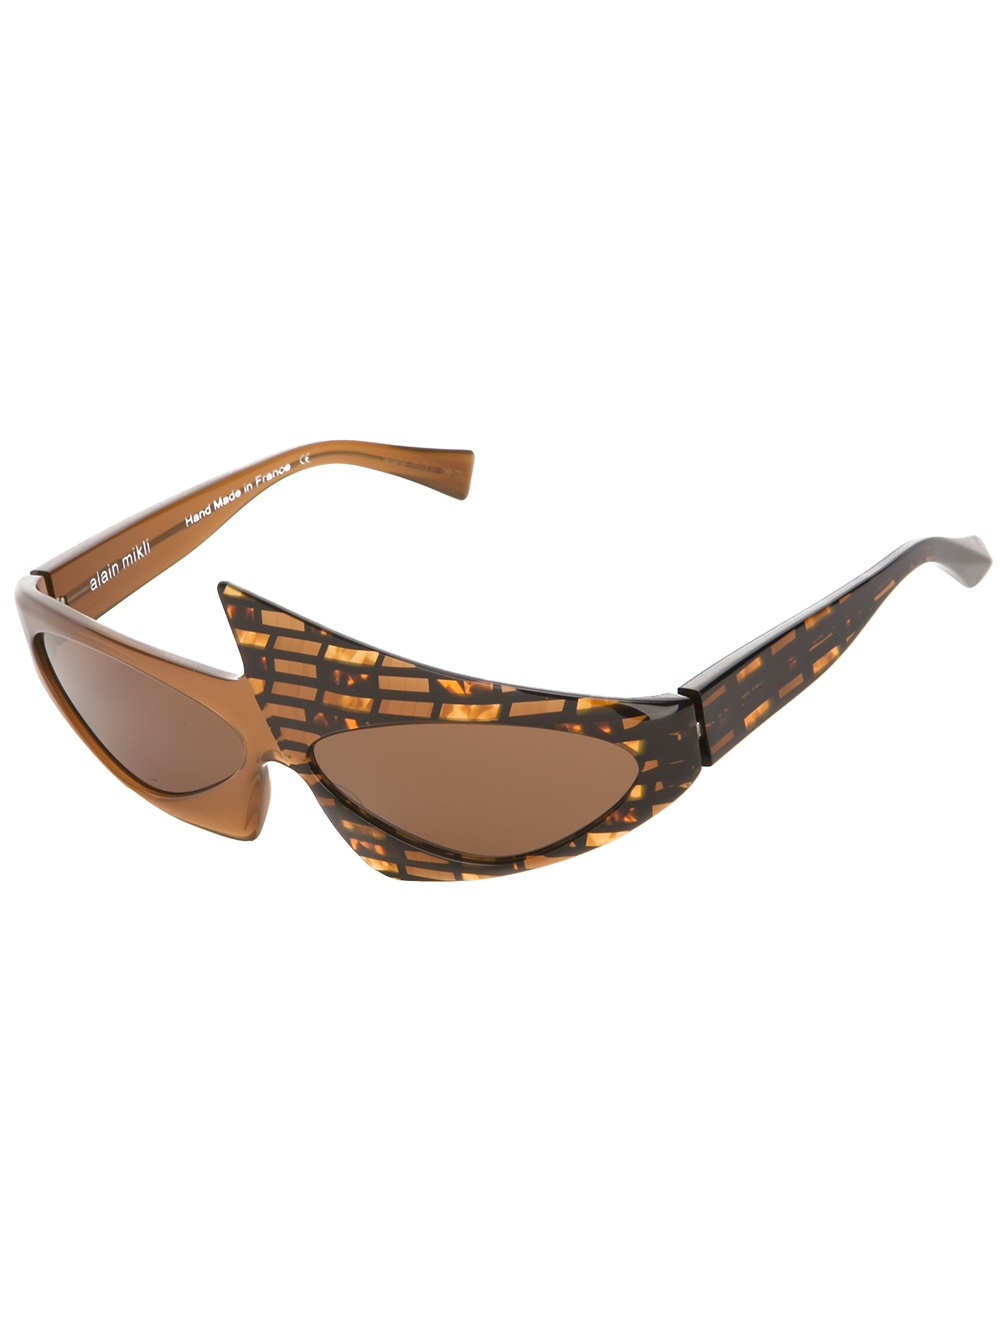 Alain Mikli Oval Asymmetrical Sunglasses in Brown for Men - Lyst